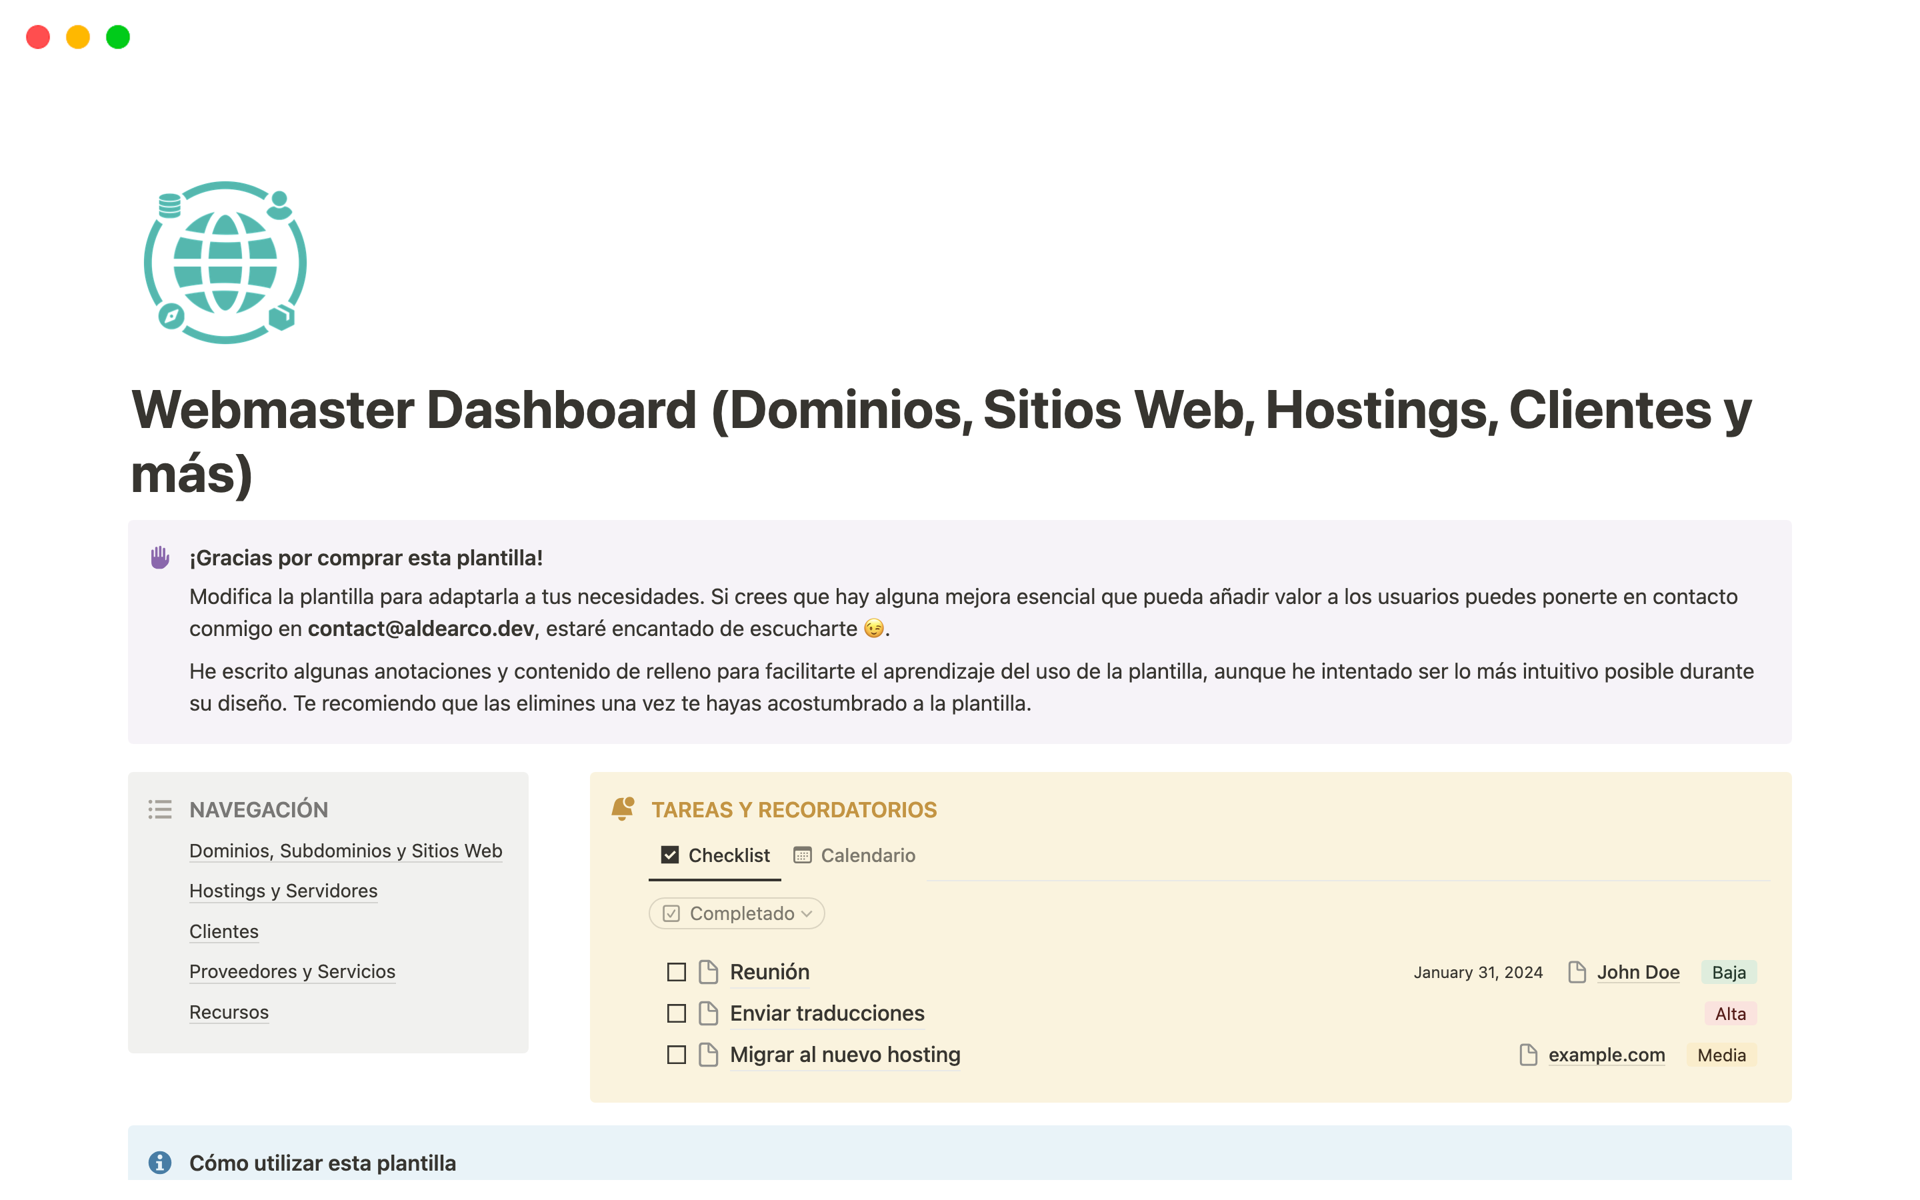 Webmaster Dashboard (Dominios, Webs, Hostings)님의 템플릿 미리보기